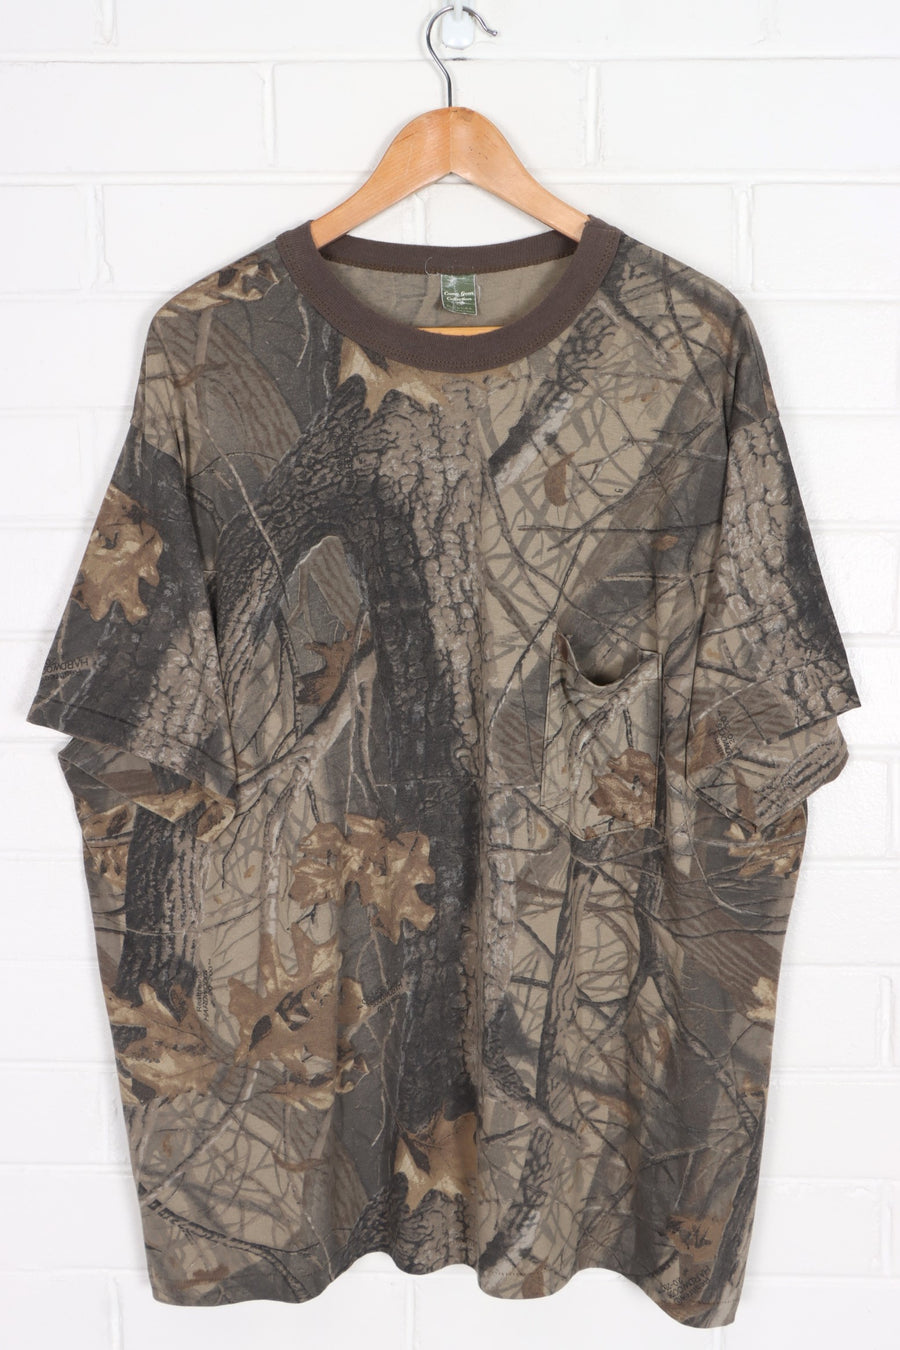 REALTREE Hardwoods 20-200 Camo Single Stitch T-Shirt USA Made (3XL)